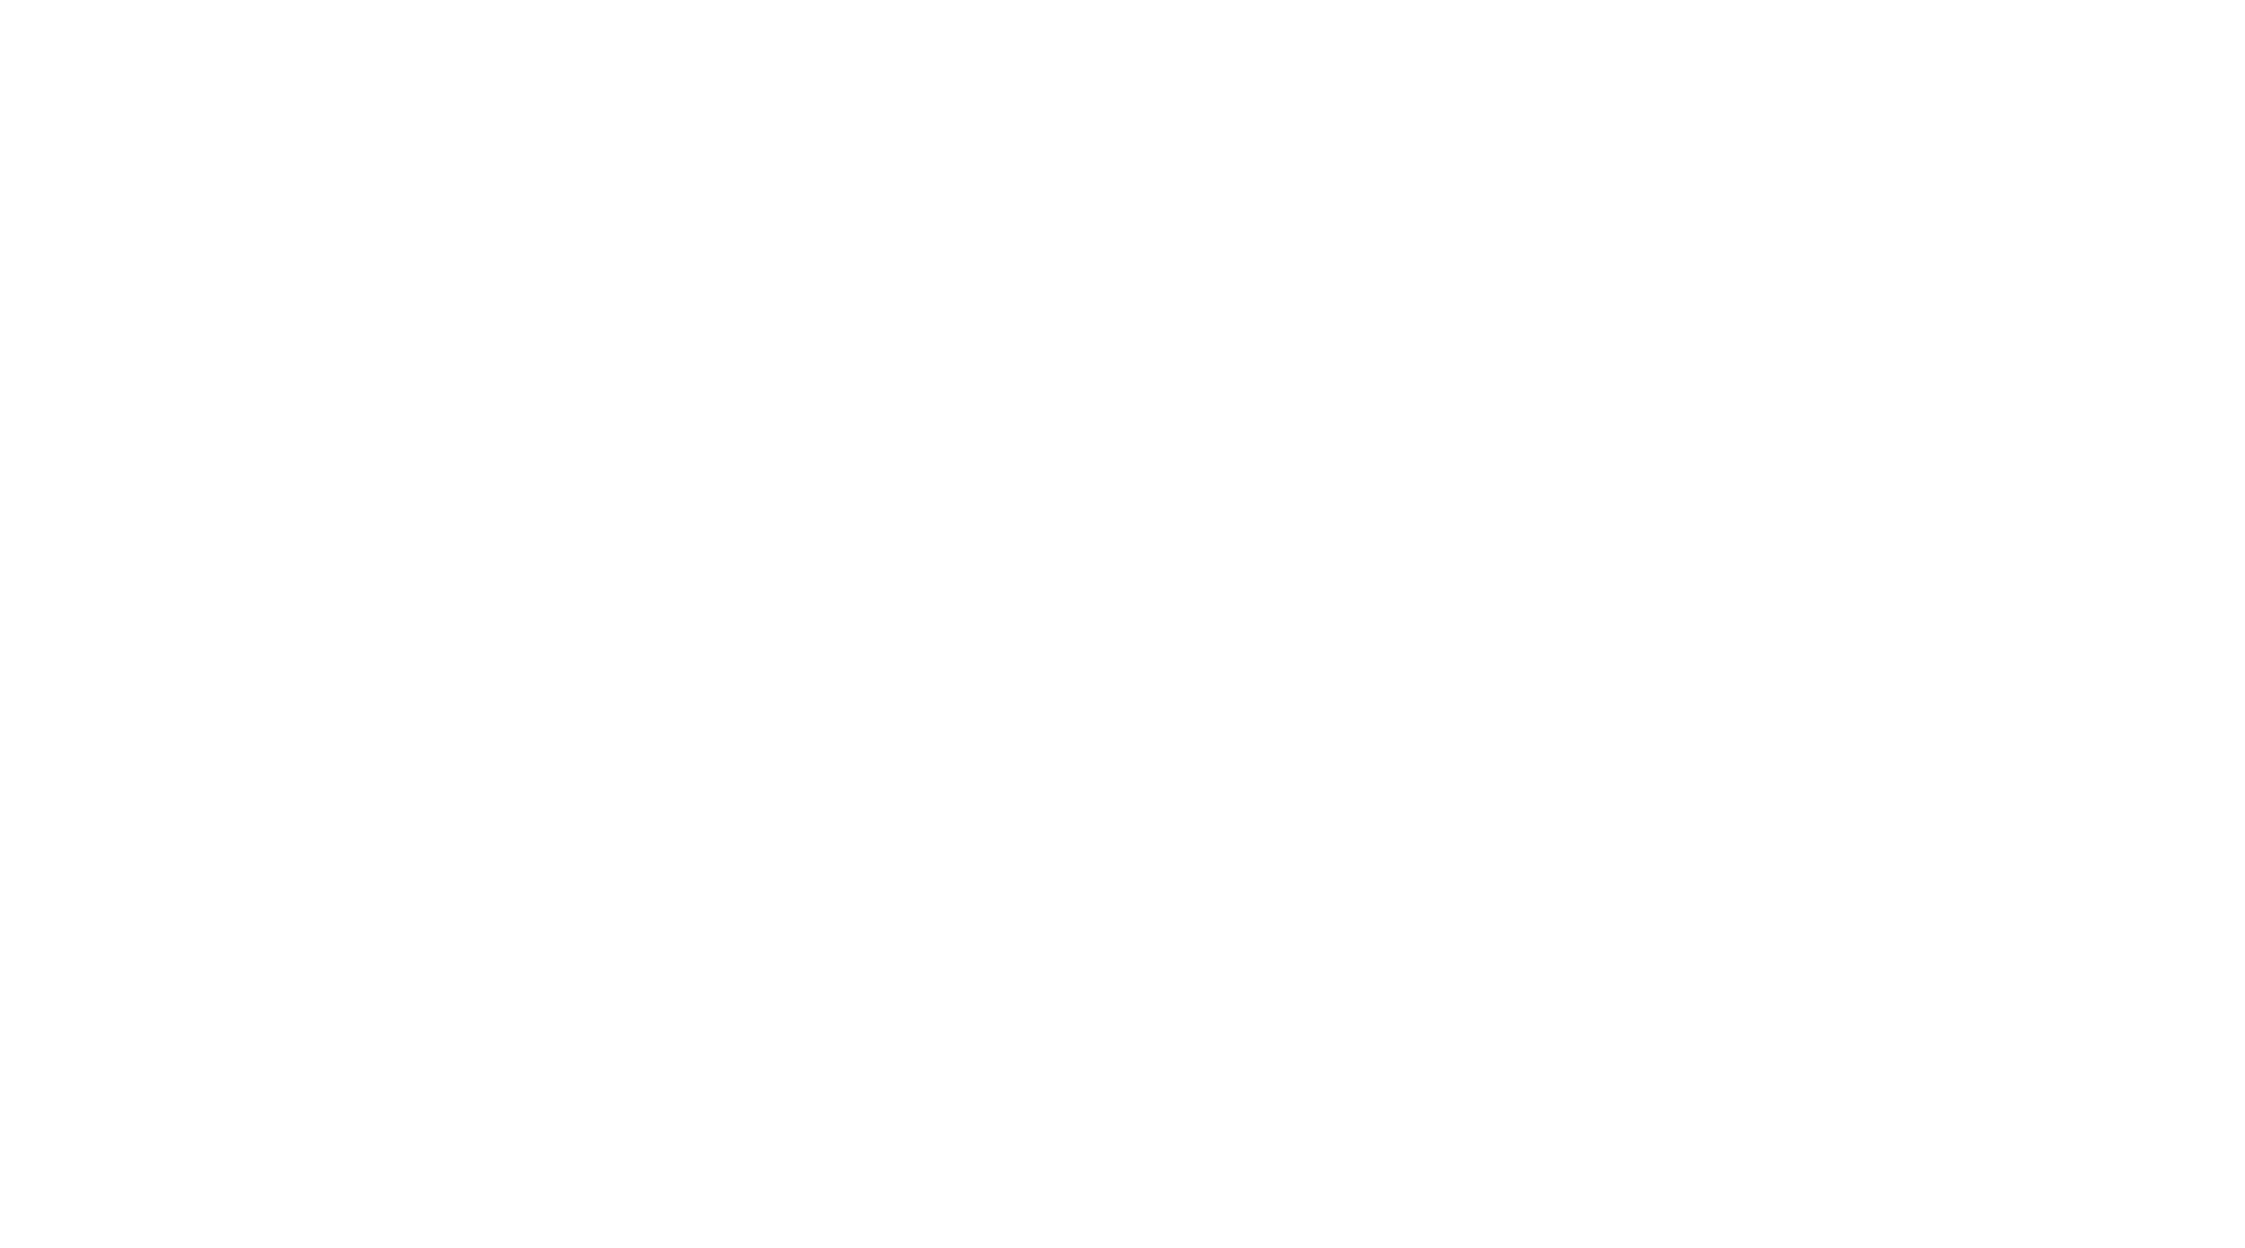 twofold soul